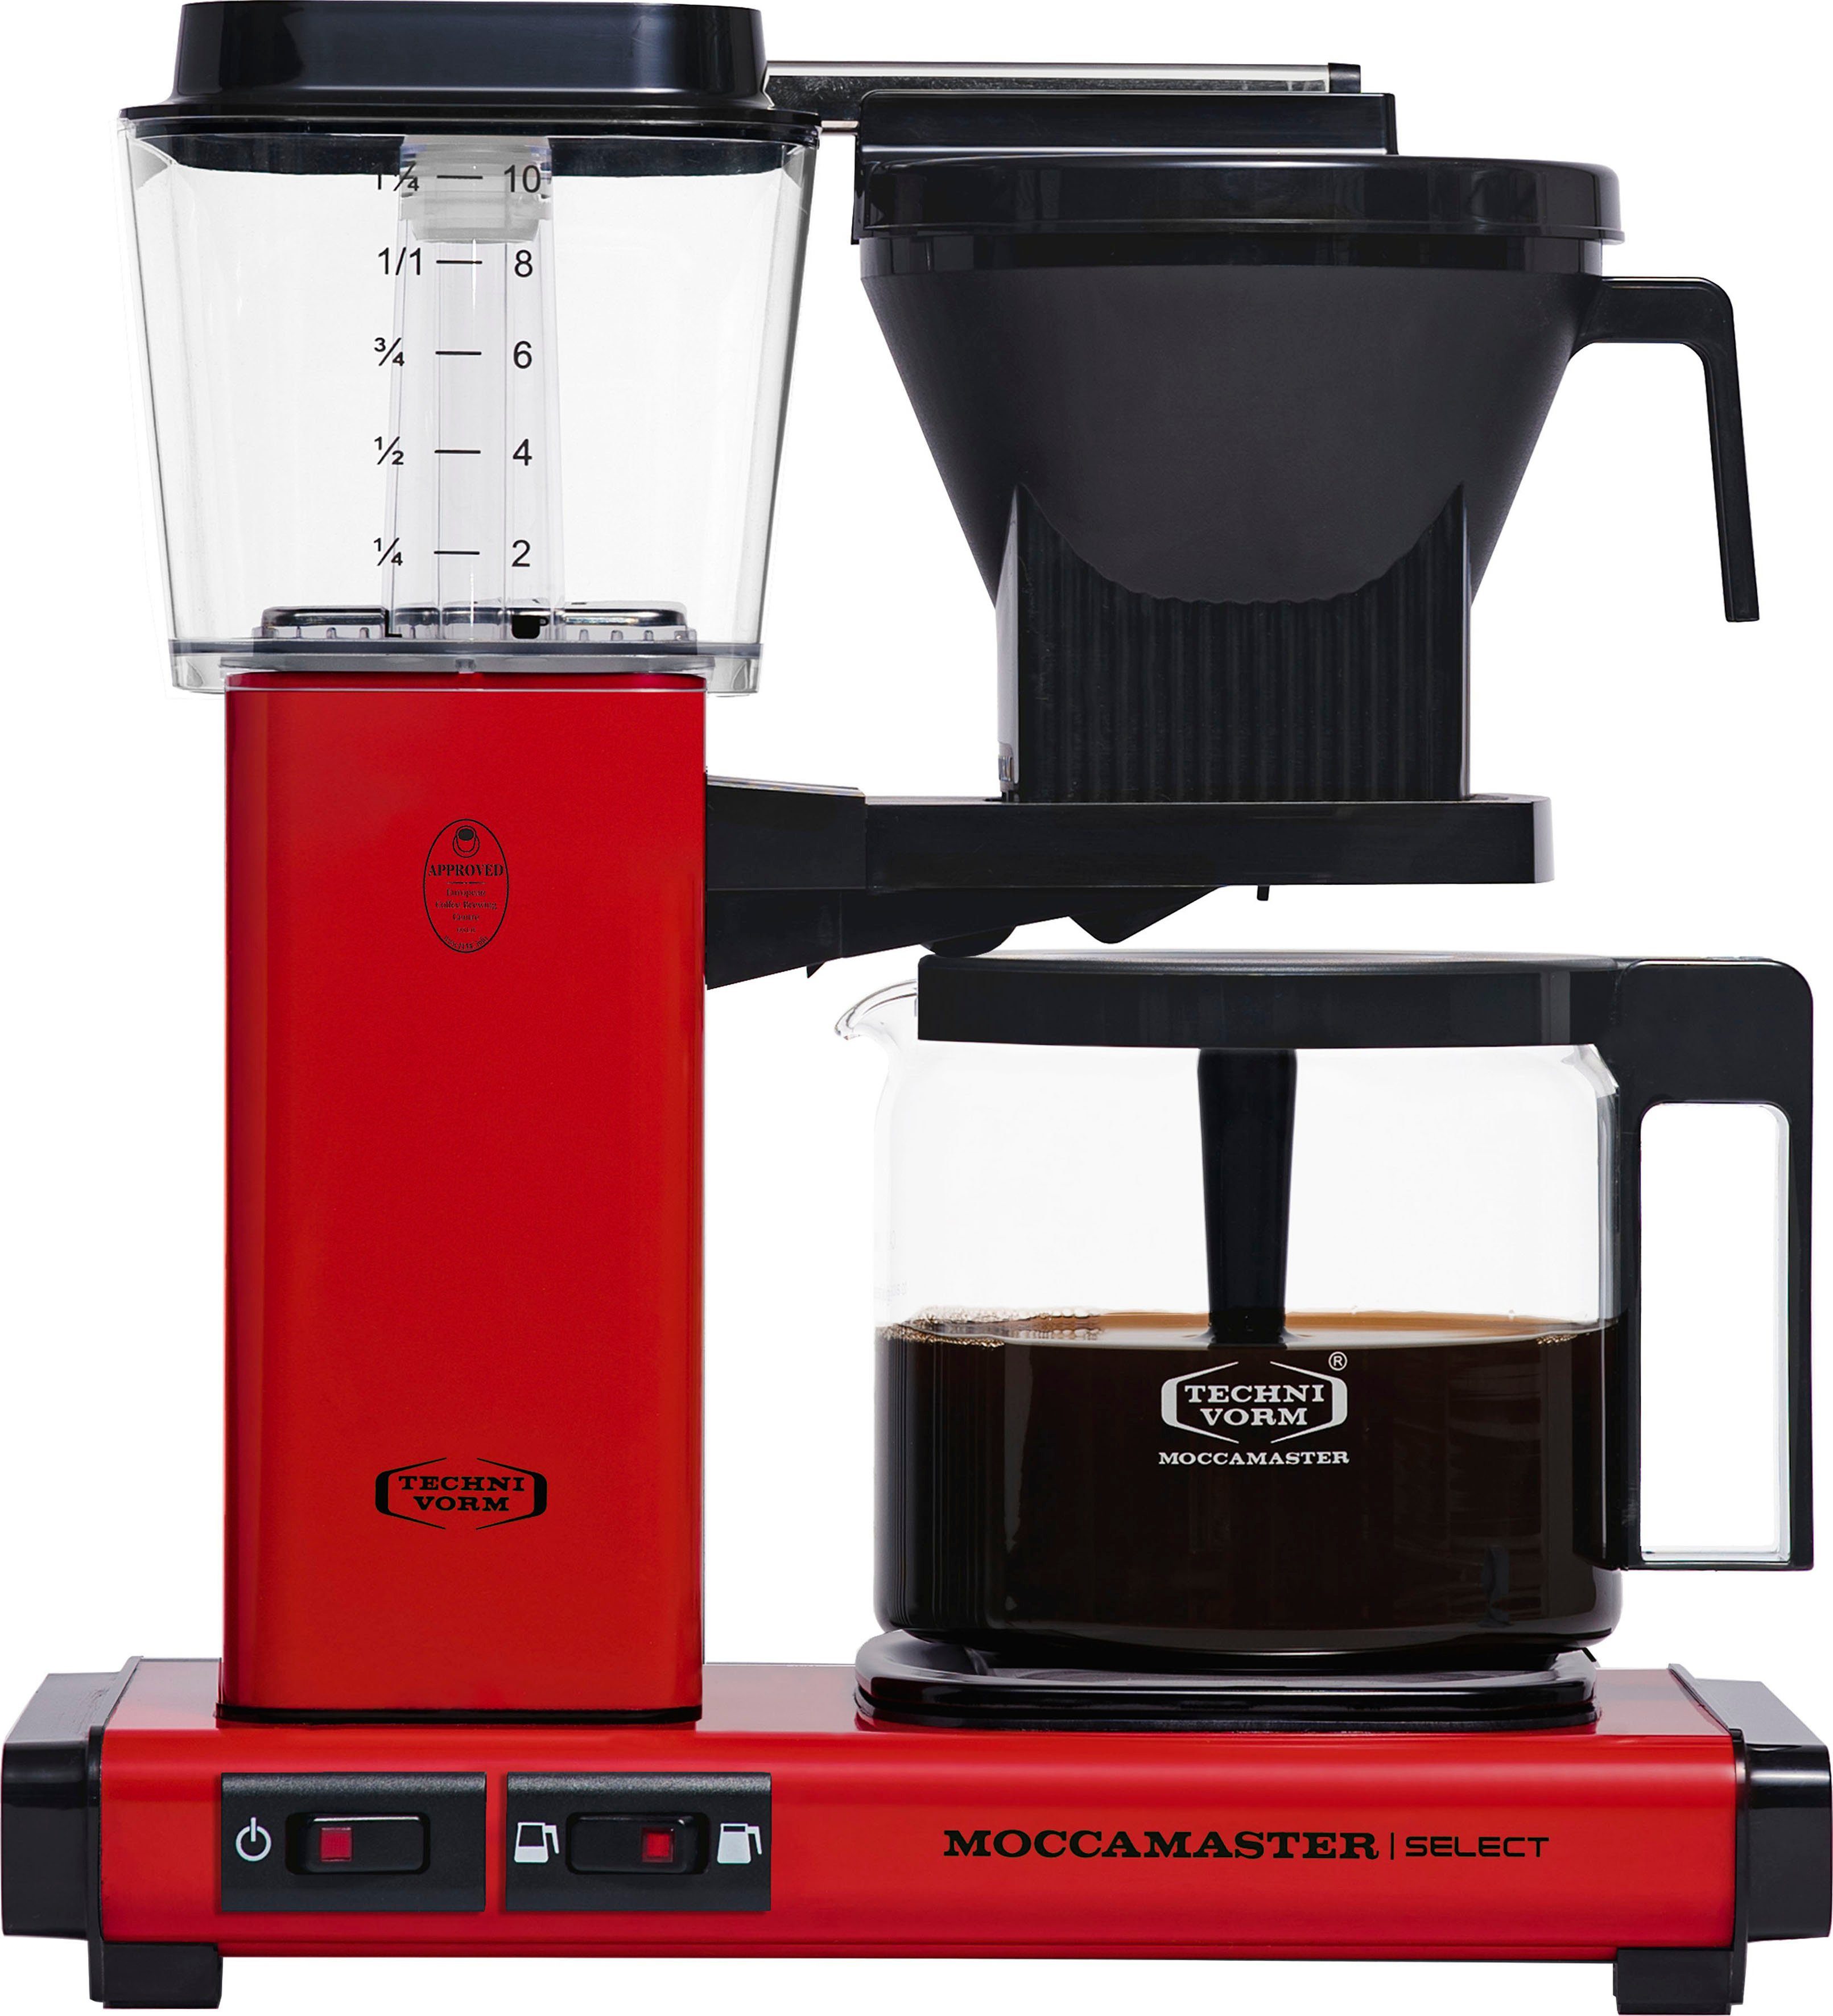 Moccamaster Filterkaffeemaschine KBG Select red, 1,25l Kaffeekanne, Papierfilter 1×4